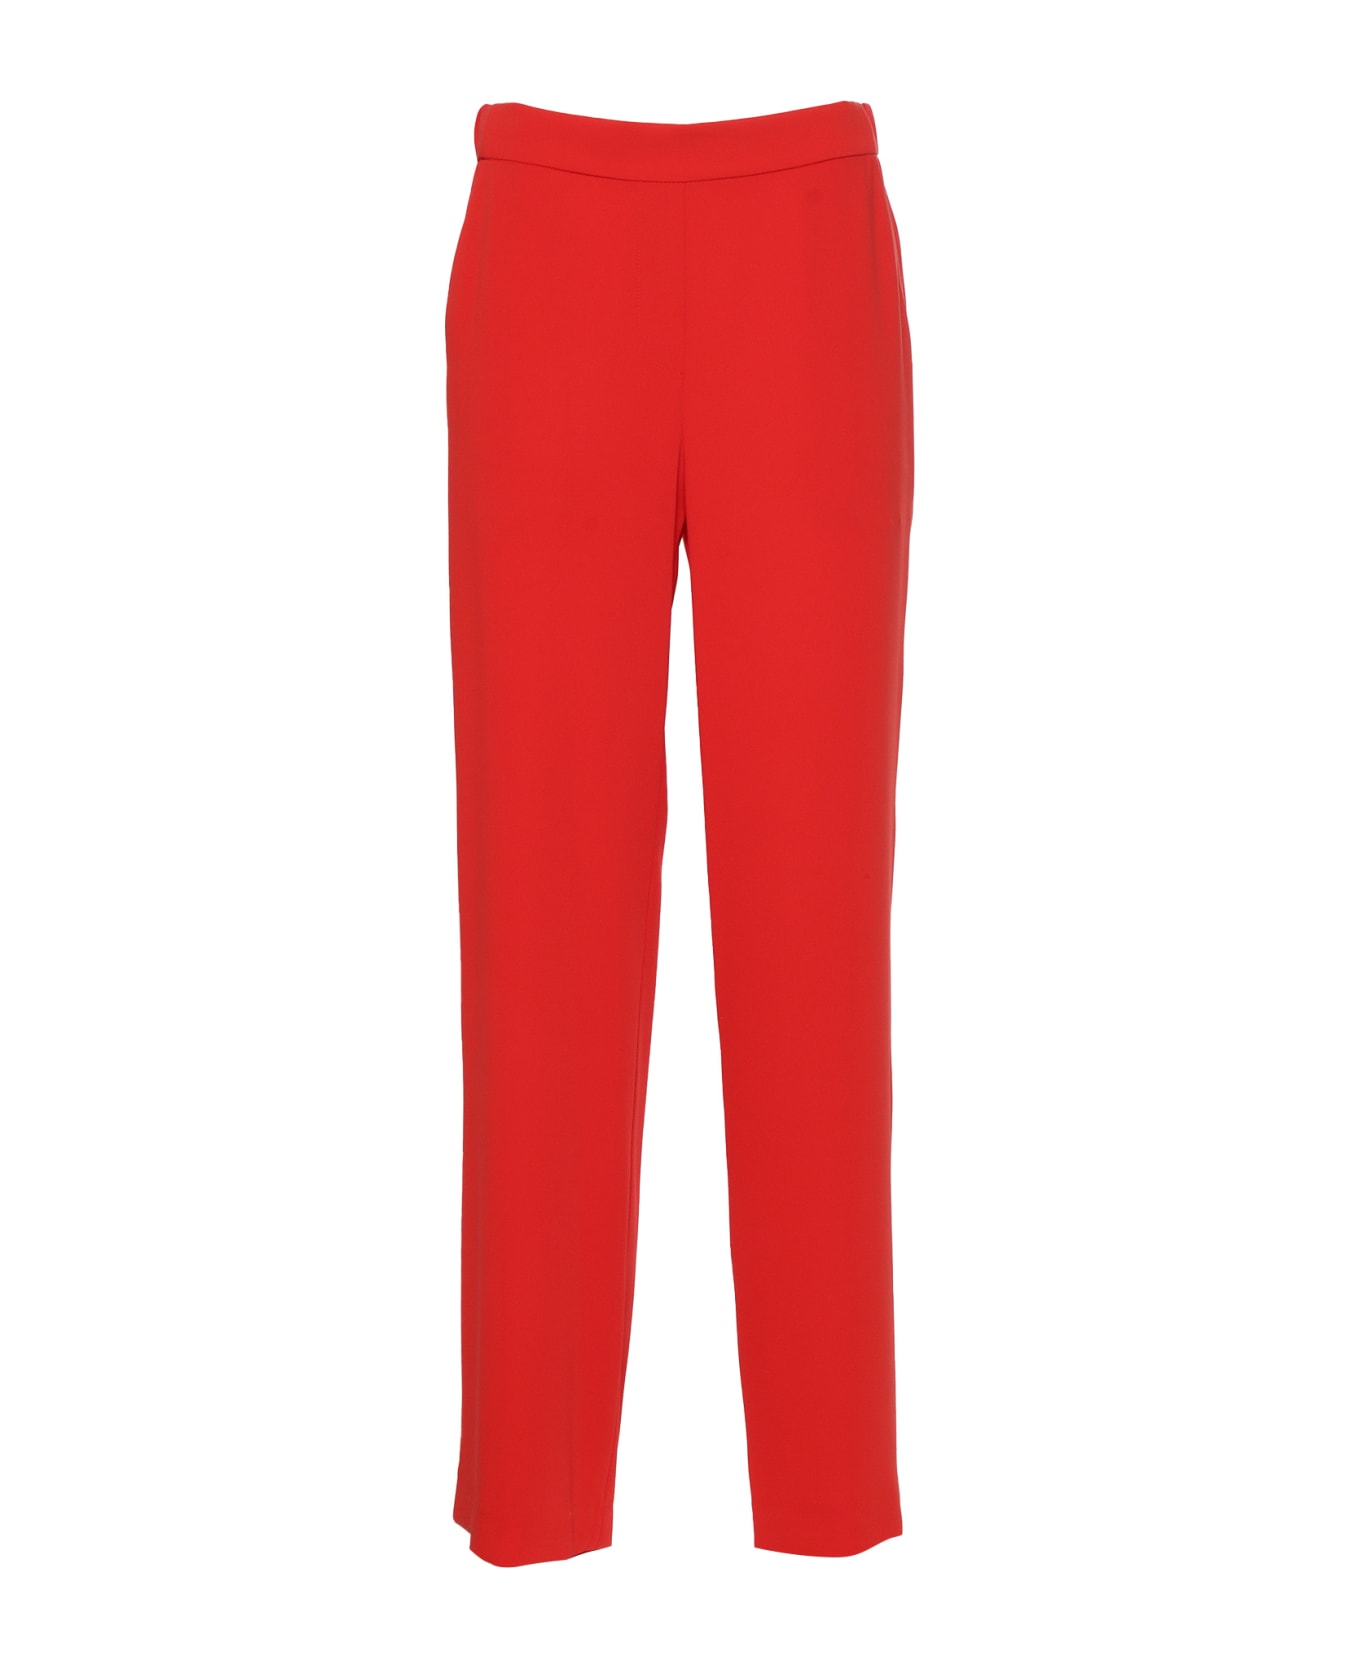 Parosh Elegant Women's Trousers - RED